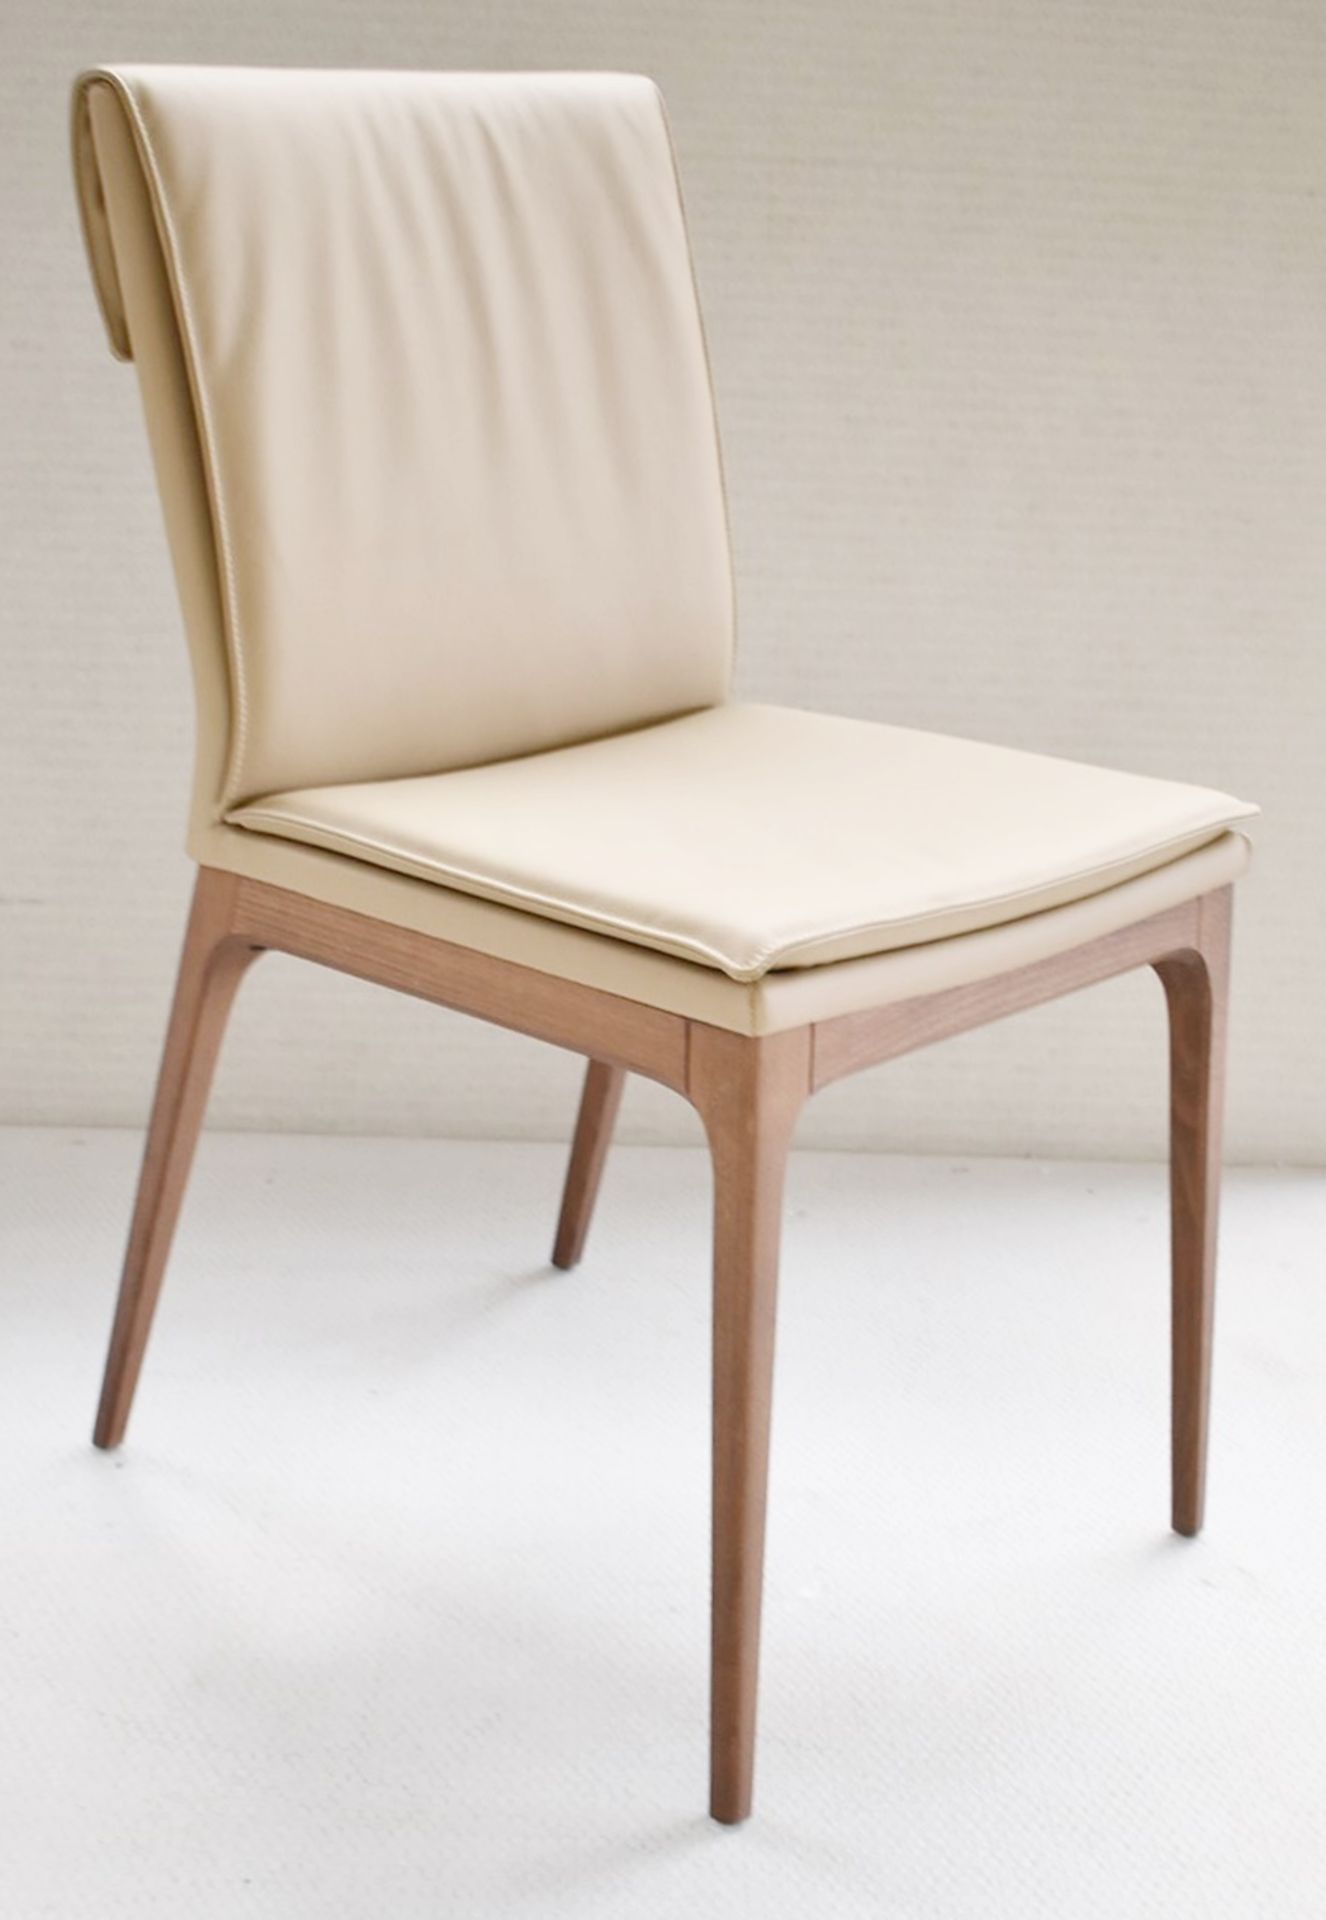 1 x CATTELAN ITALIA 'Sofia' Leather Upholsted Designer Chair - Original RRP £520.00 - Ref: 4934658/ - Image 2 of 9